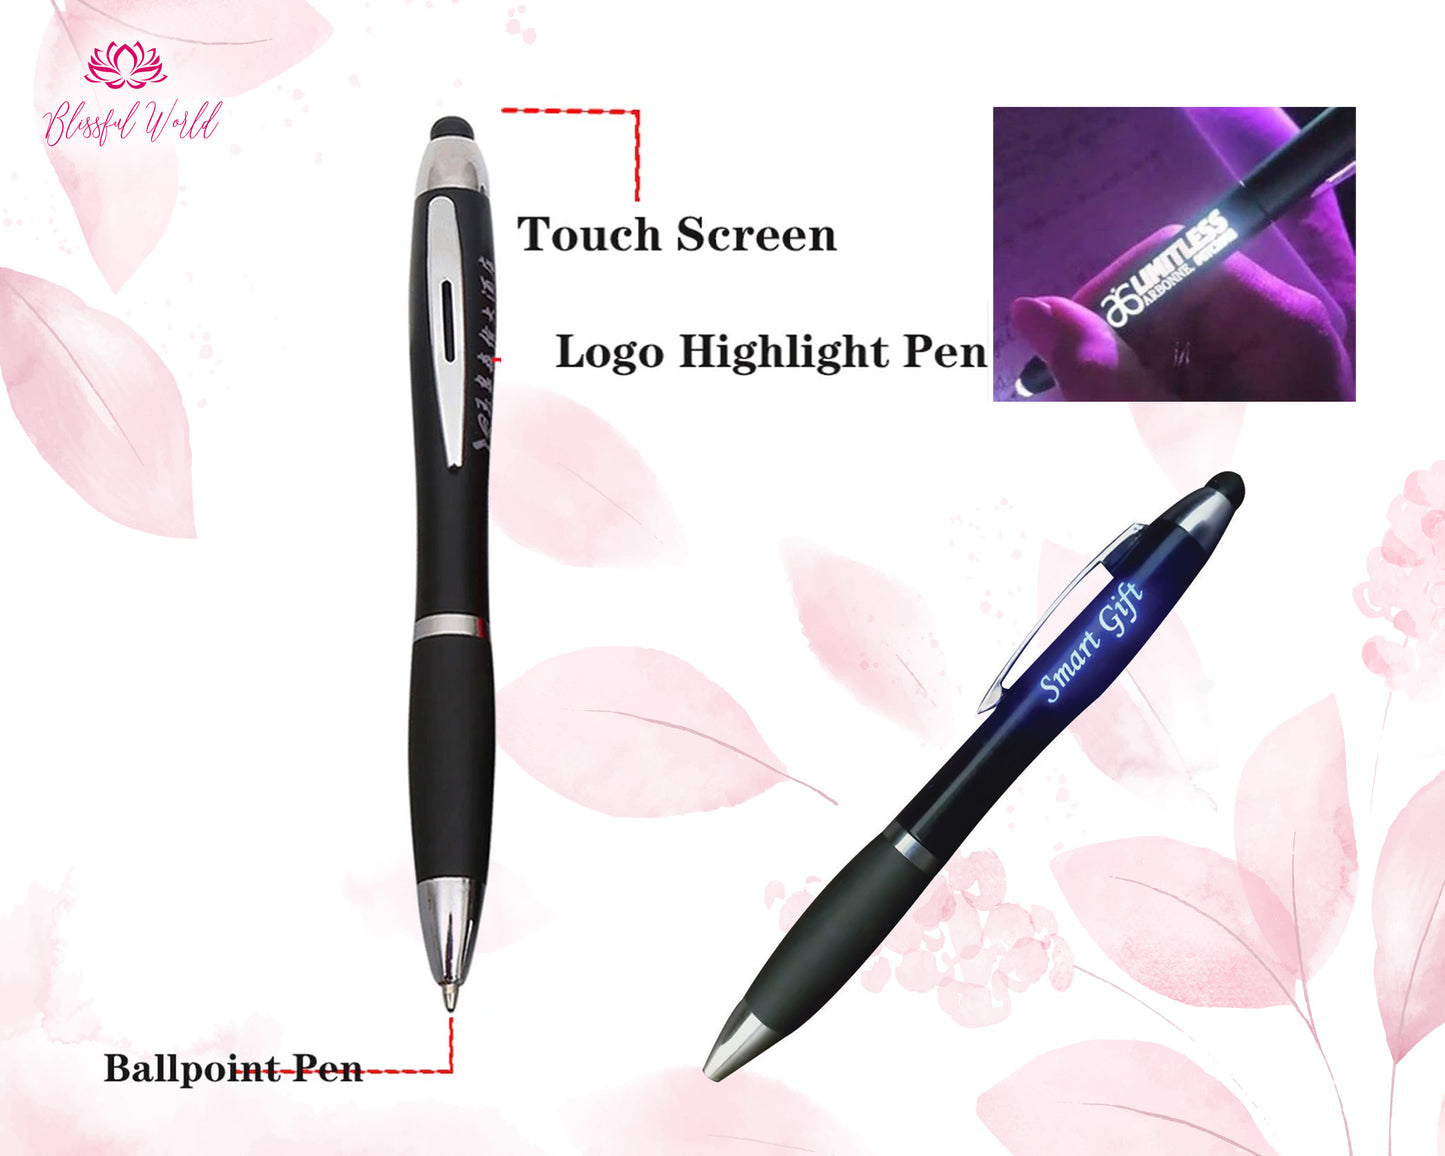 LED Personalize Pens Custom Engraved Pen Customized Pens with Stylus Custom Name Pens Birthday Gift Pens Teacher's Gift for Teachers and Writers Name on Pen LED